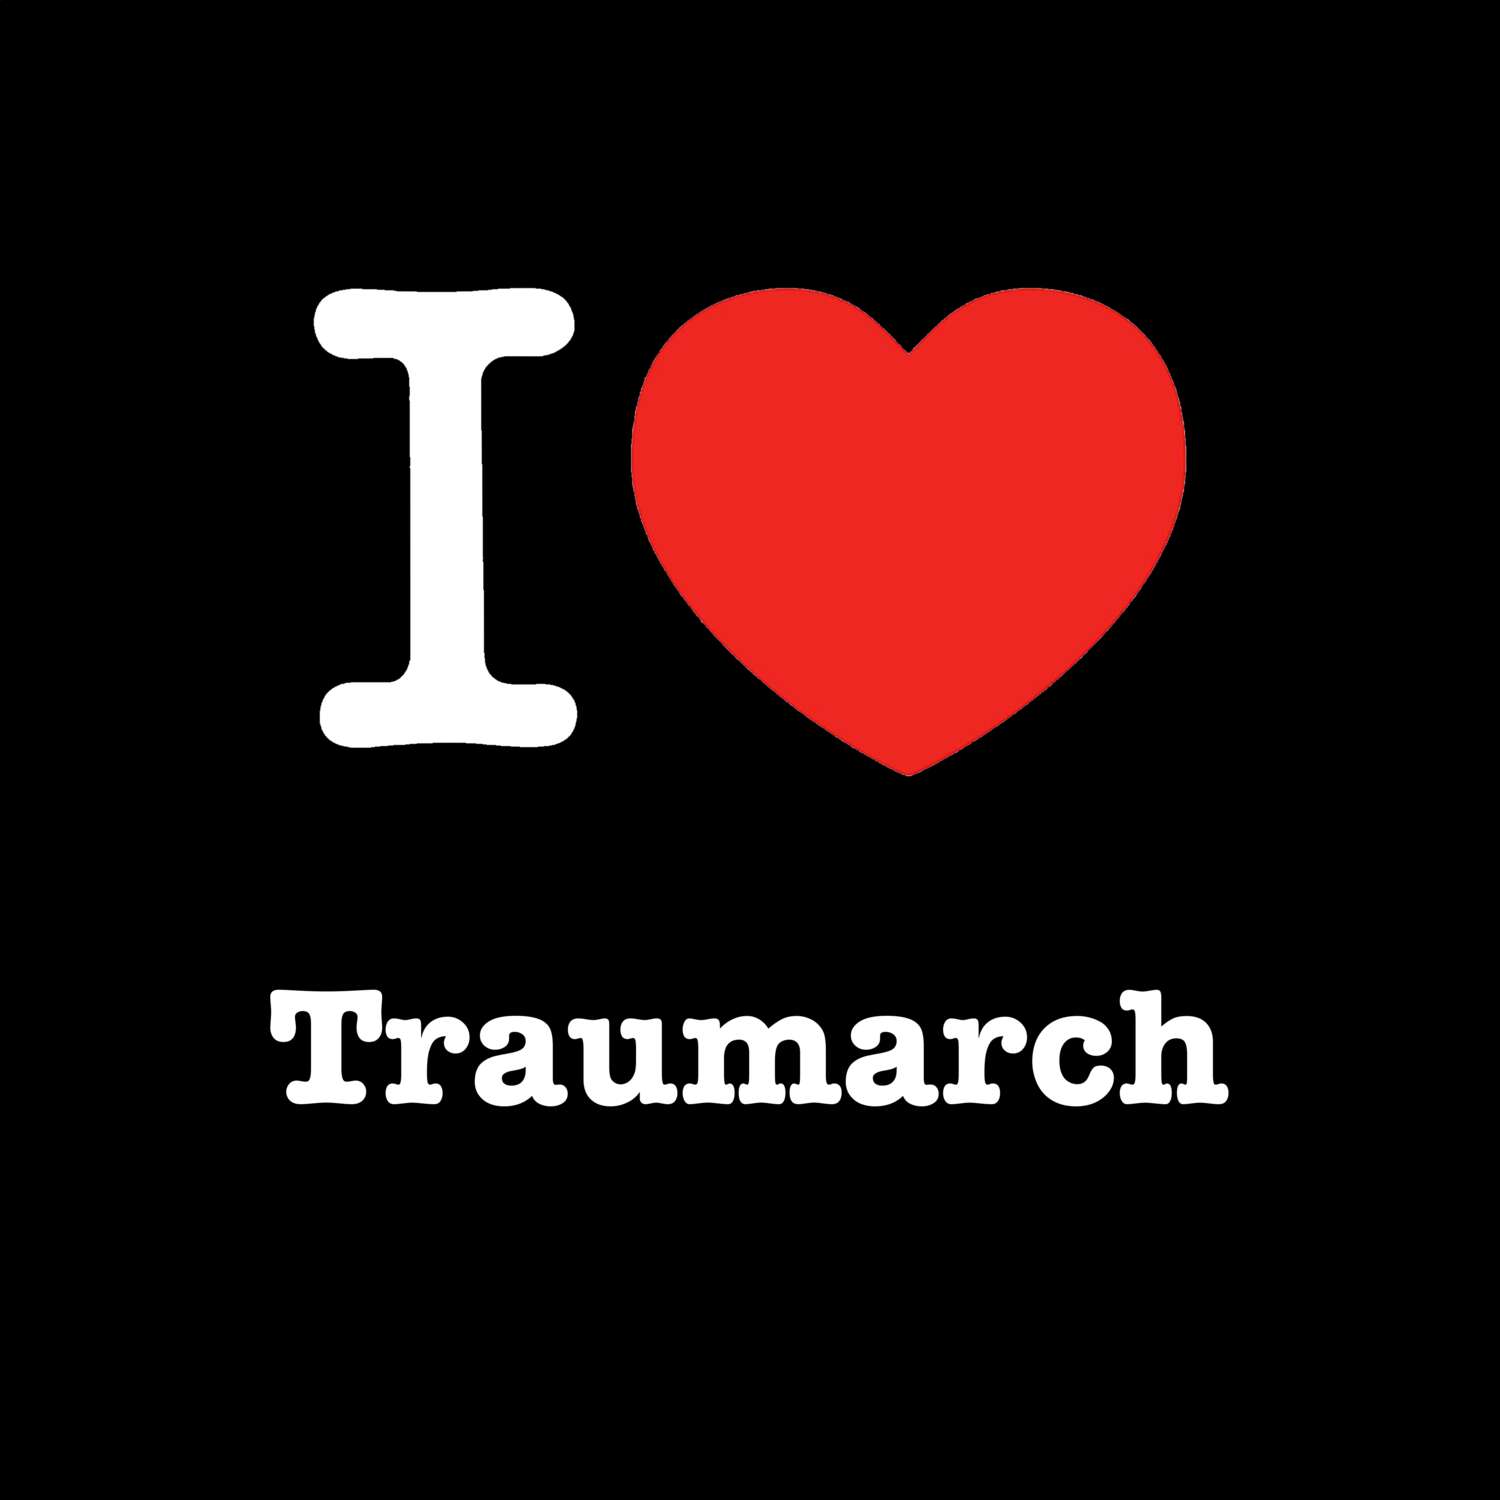 Traumarch T-Shirt »I love«